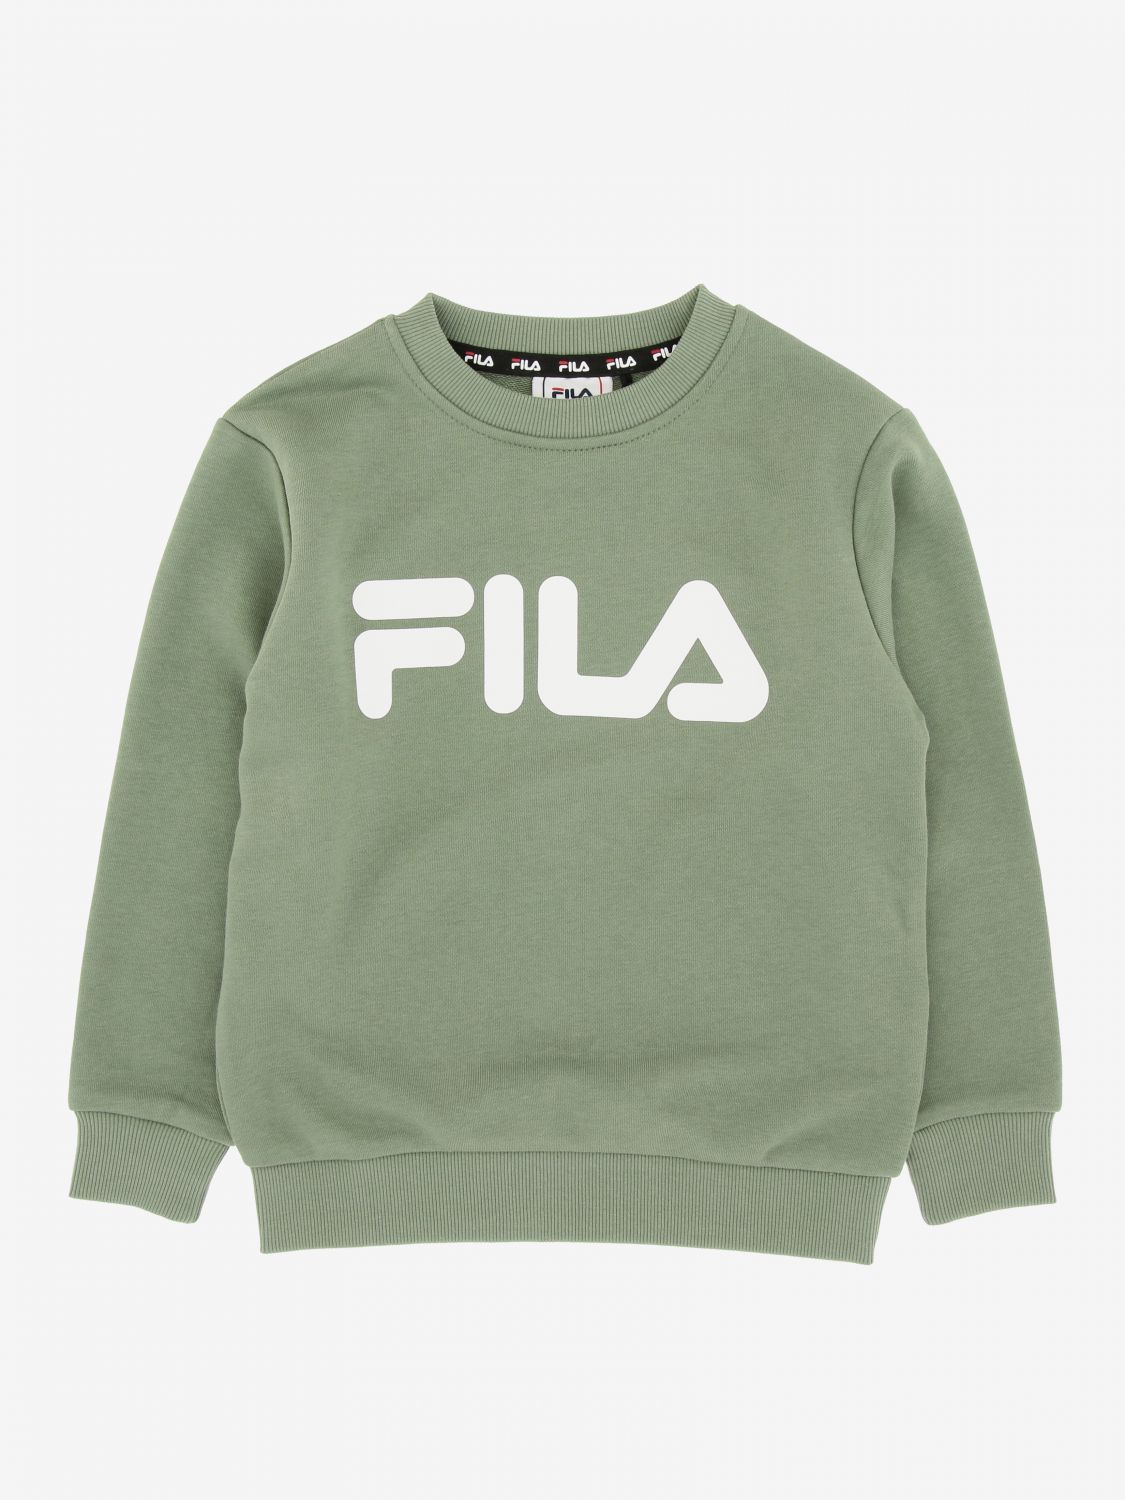 Klas ambulance Wrok FILA: sweater for boys - Water | Fila sweater 688096 online on GIGLIO.COM